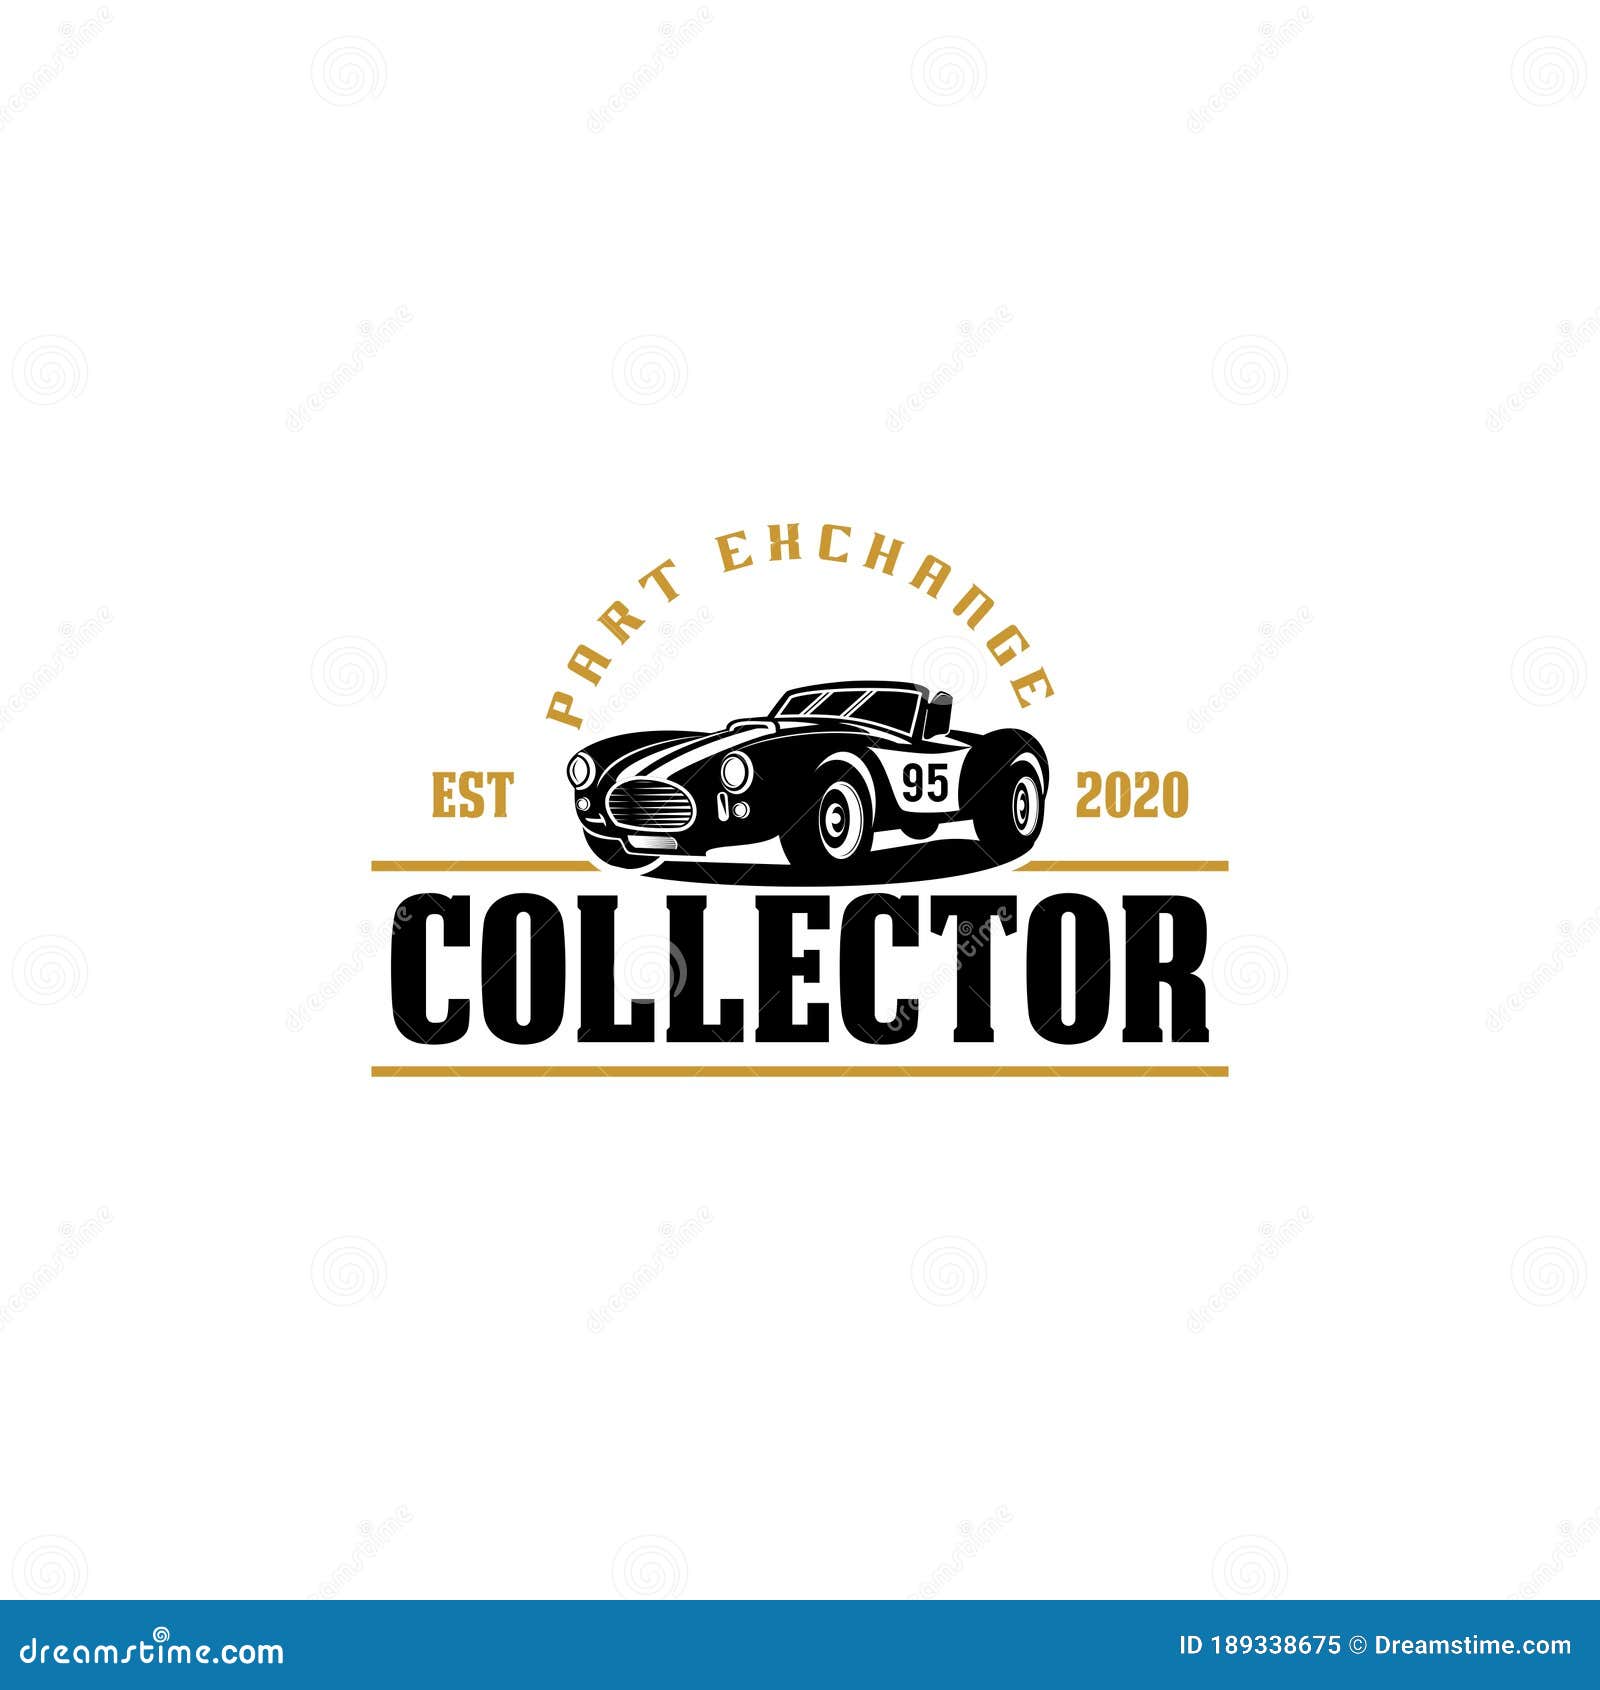 Vintage Car Collector Logo Vecotr Stock Vector - Illustration of ...